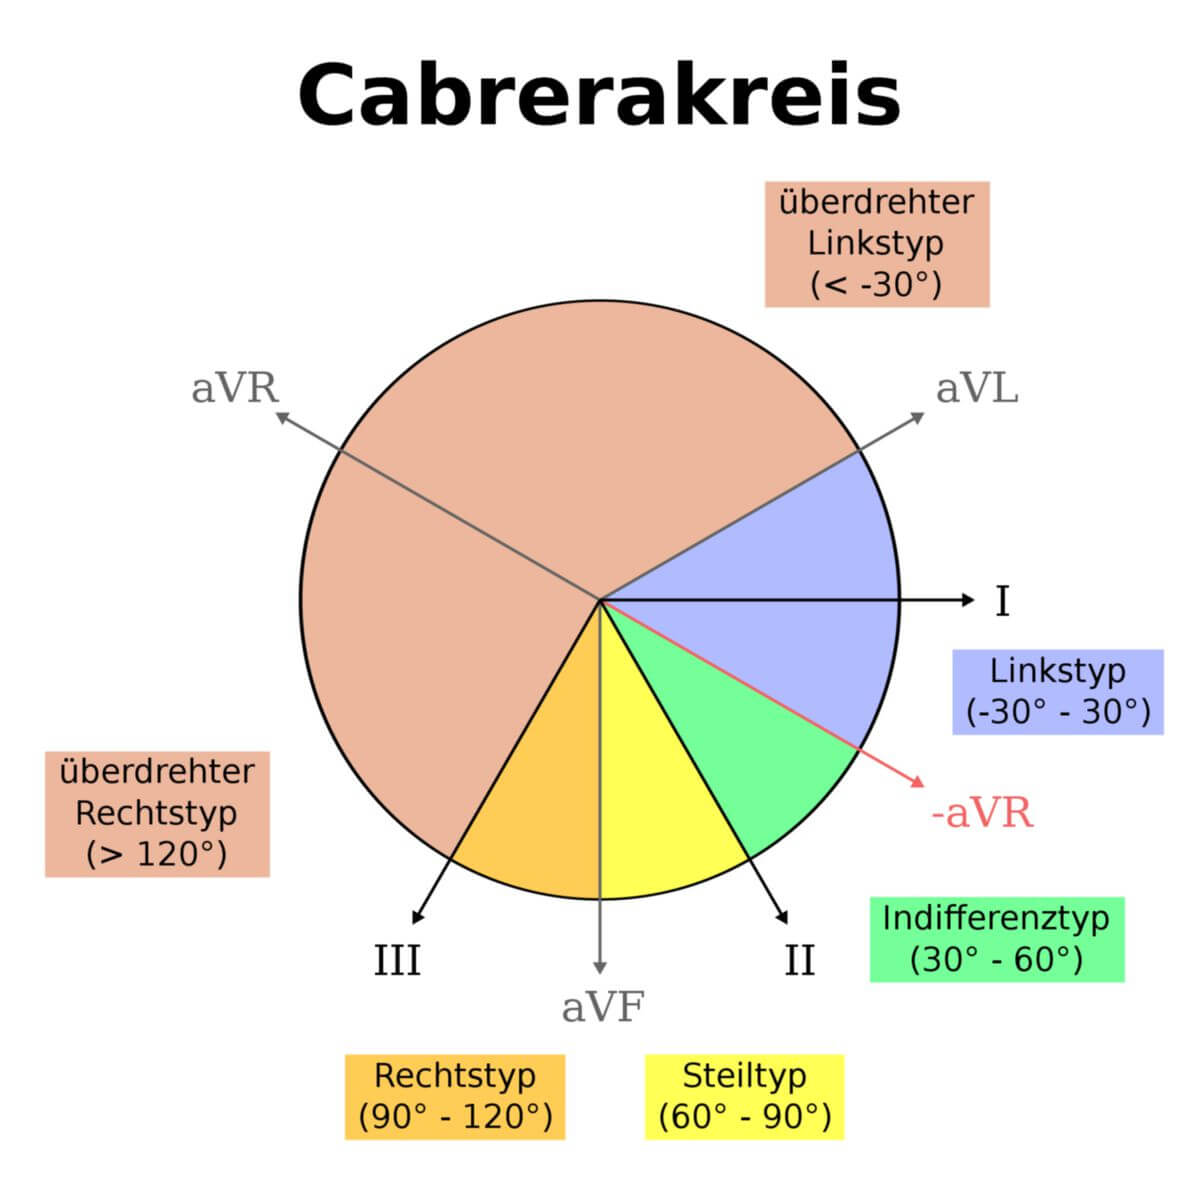 Cabrebra-Kreis